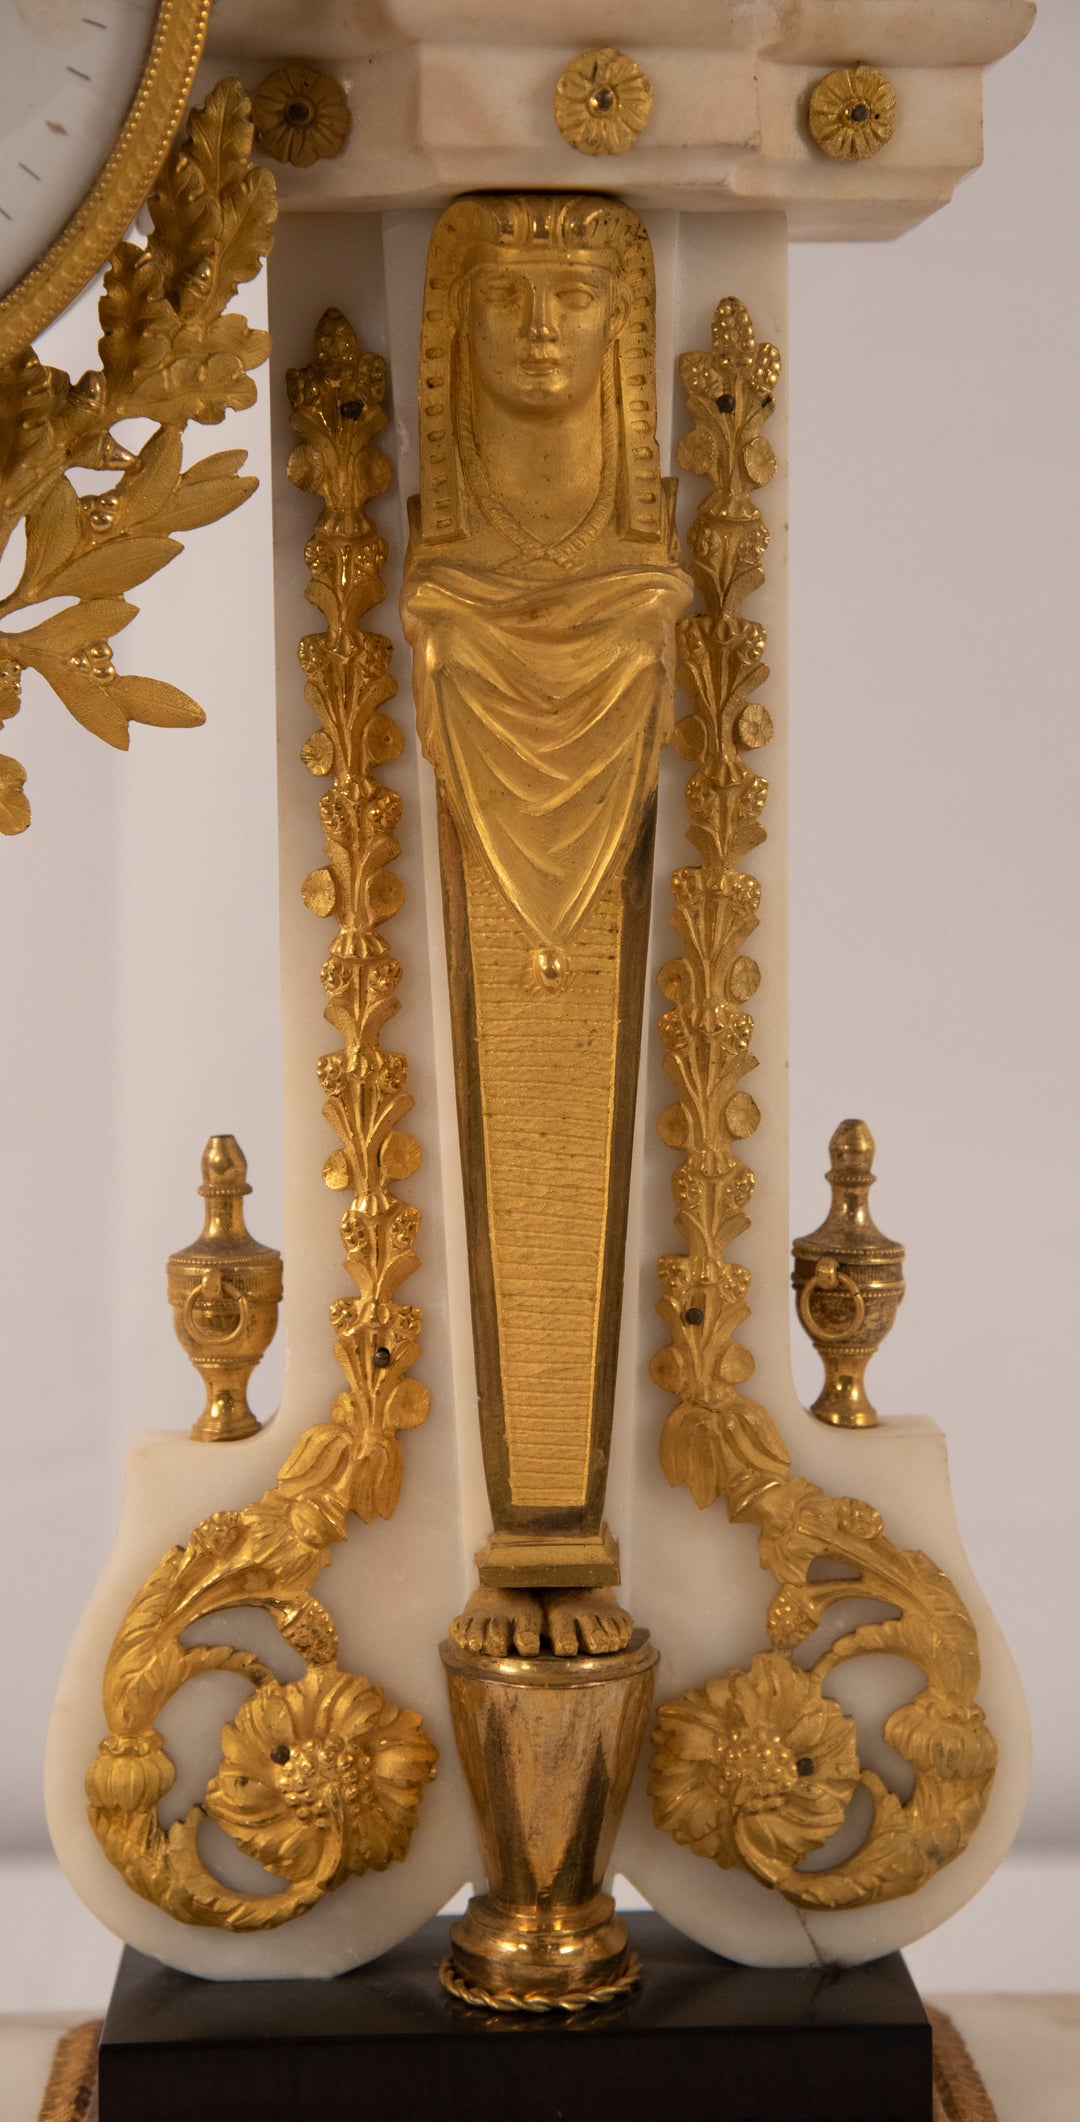 French Empire Gilded Ormolue Clock